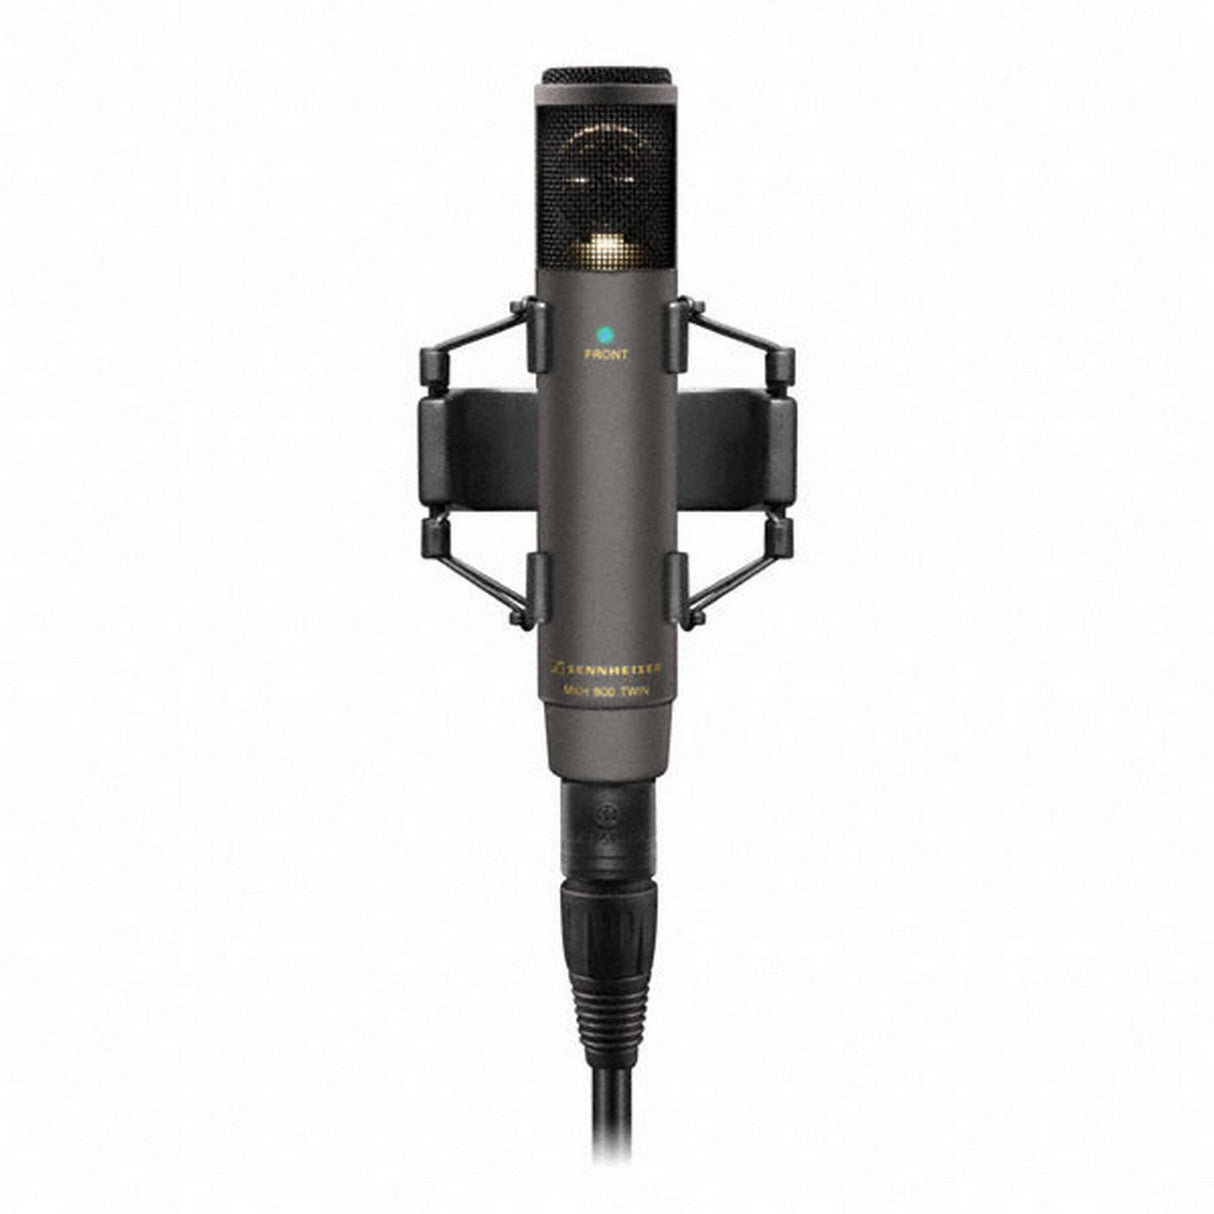 Sennheiser MKH 800 TWIN NX Dual Cardioid Universal Studio Condenser Microphone